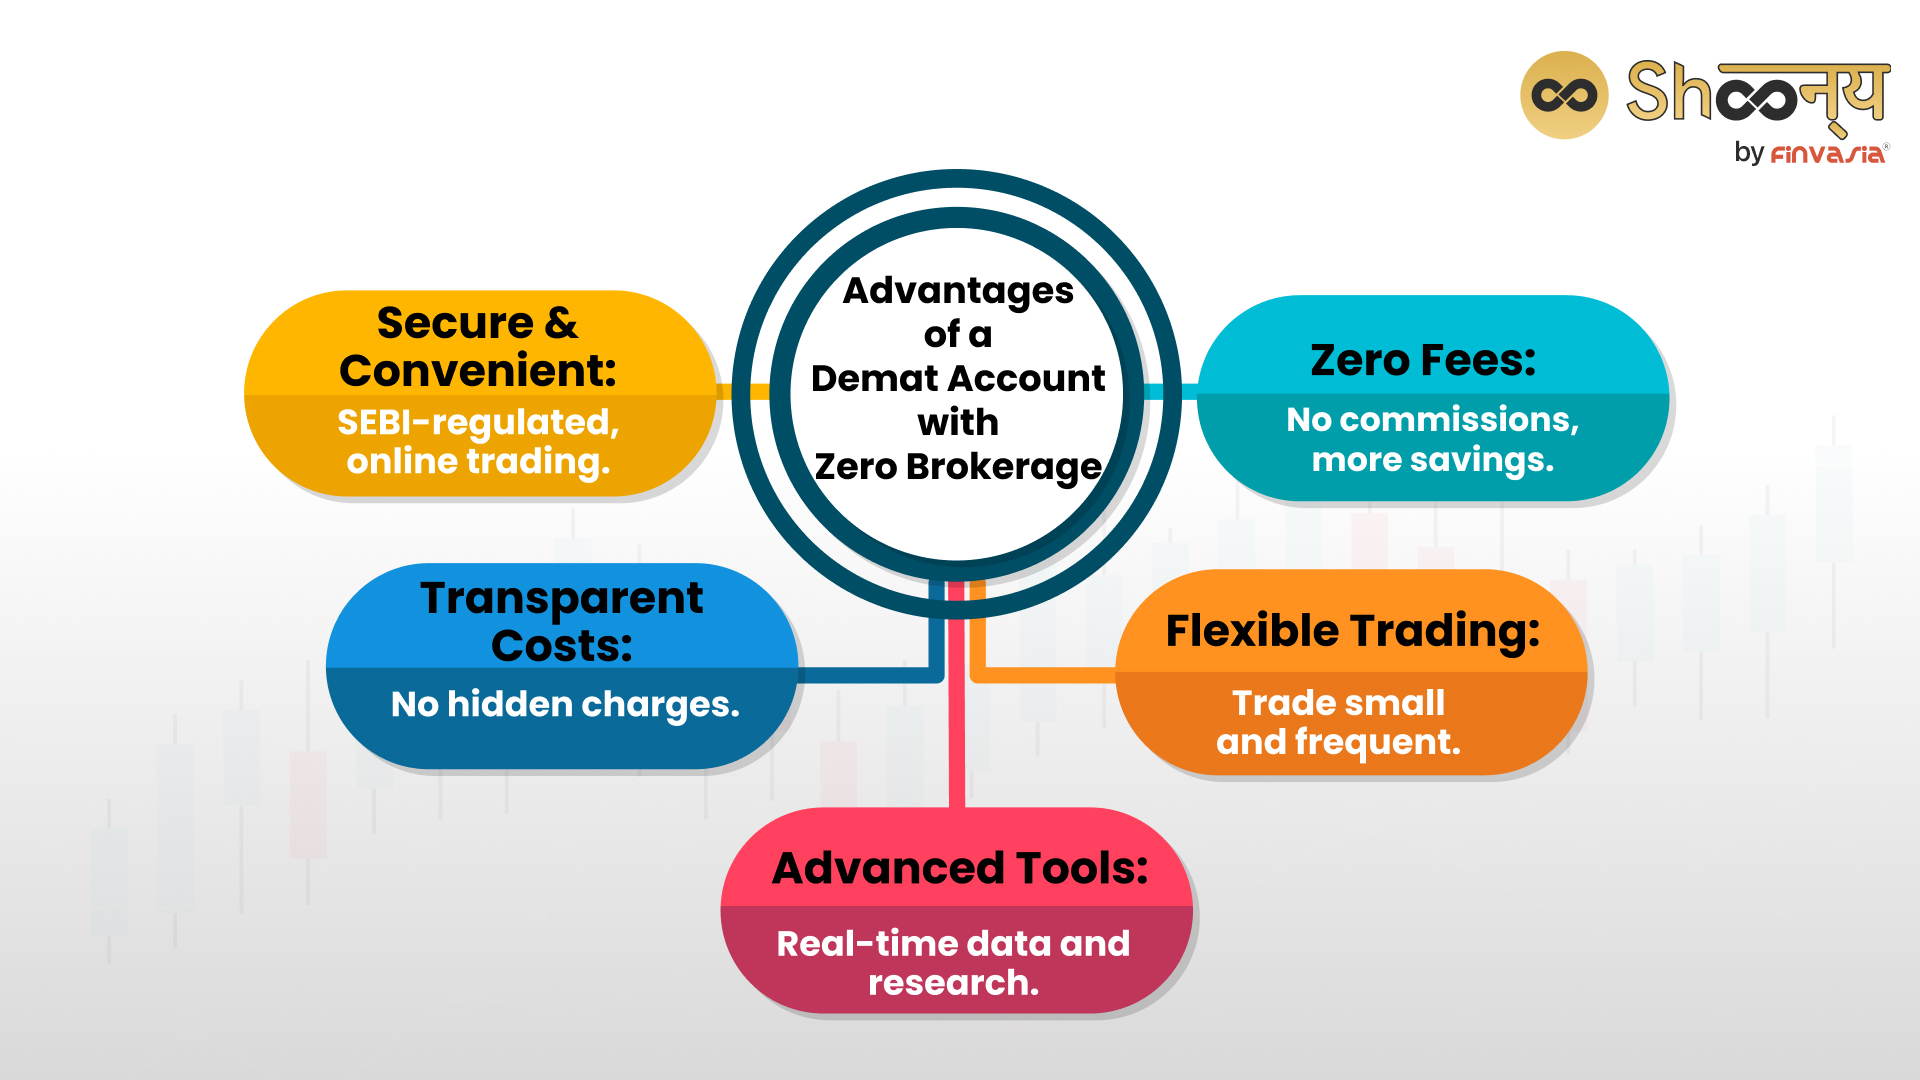 Advantages of a Demat Account with Zero Brokerage
